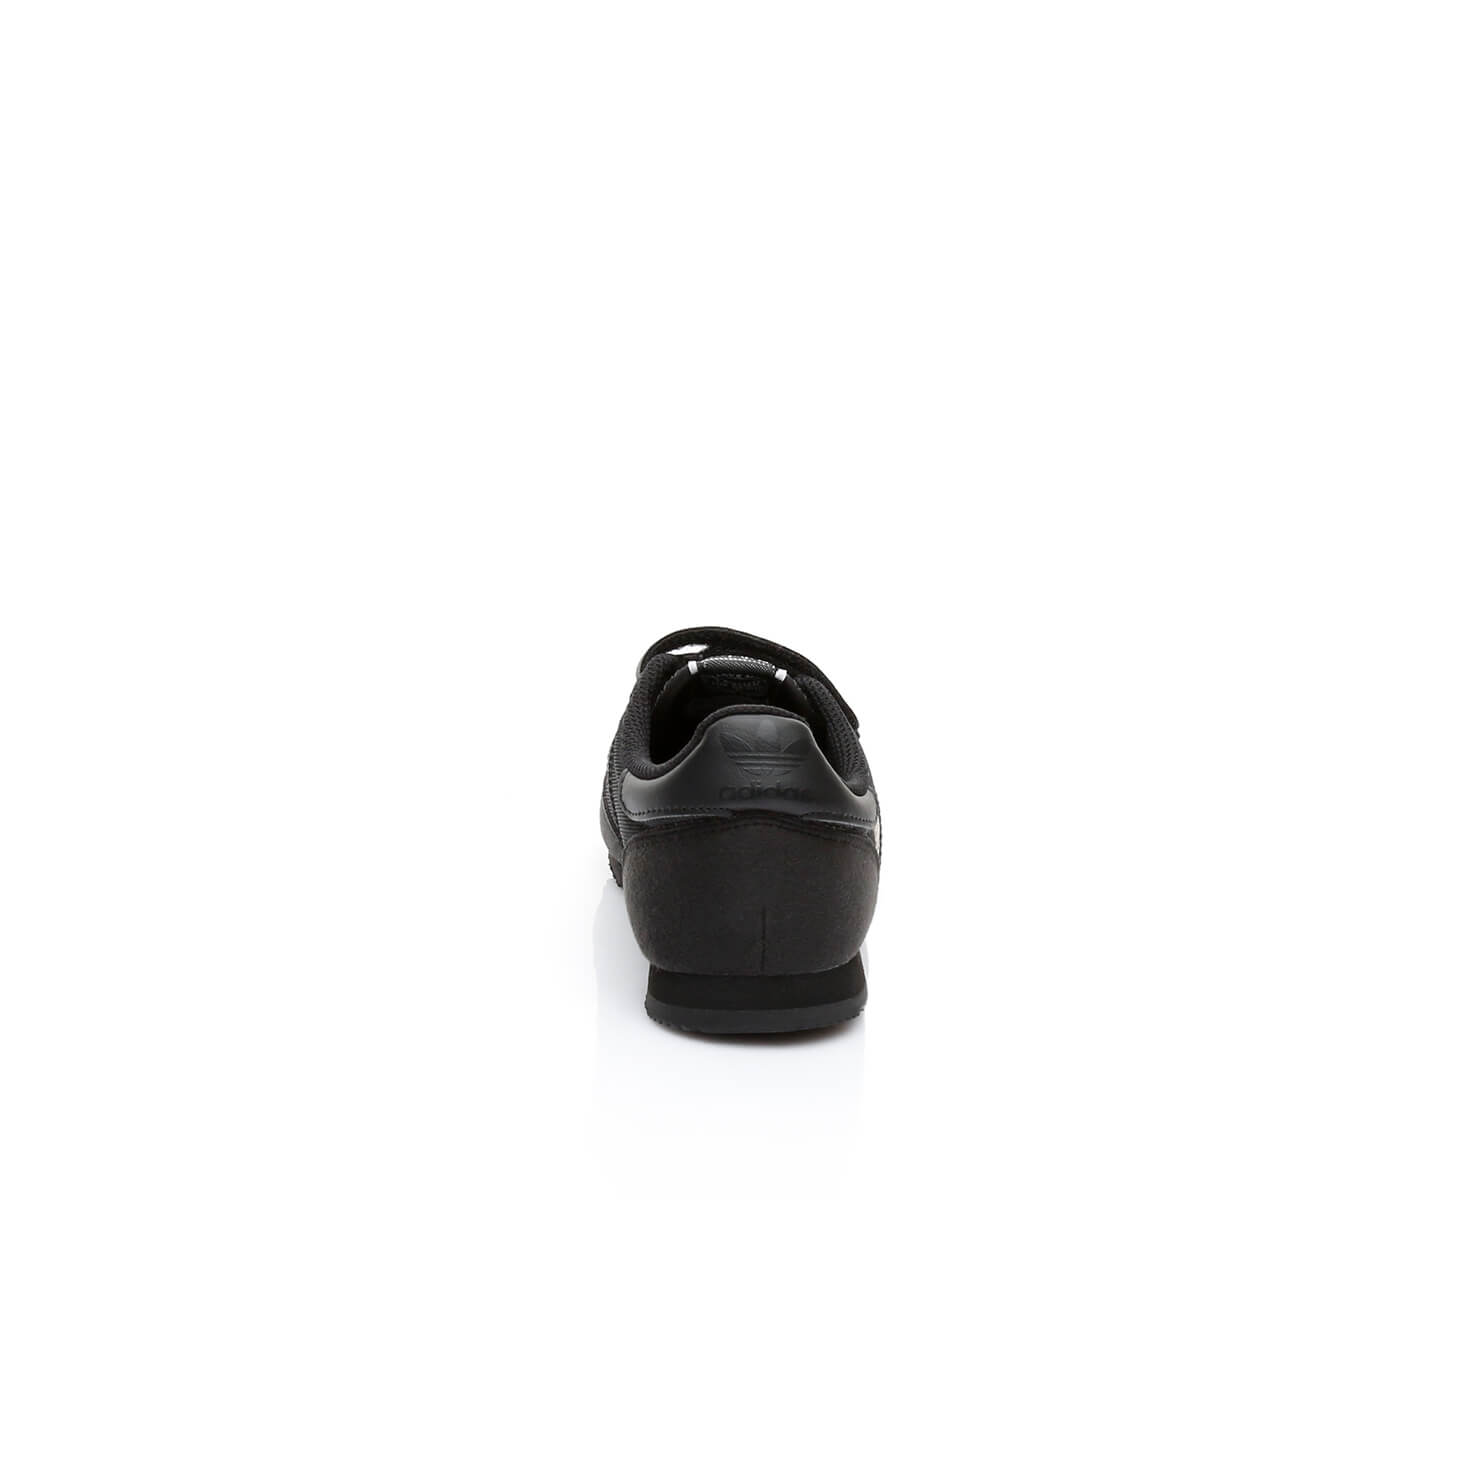 adidas Dragon OG Çocuk Siyah Sneaker